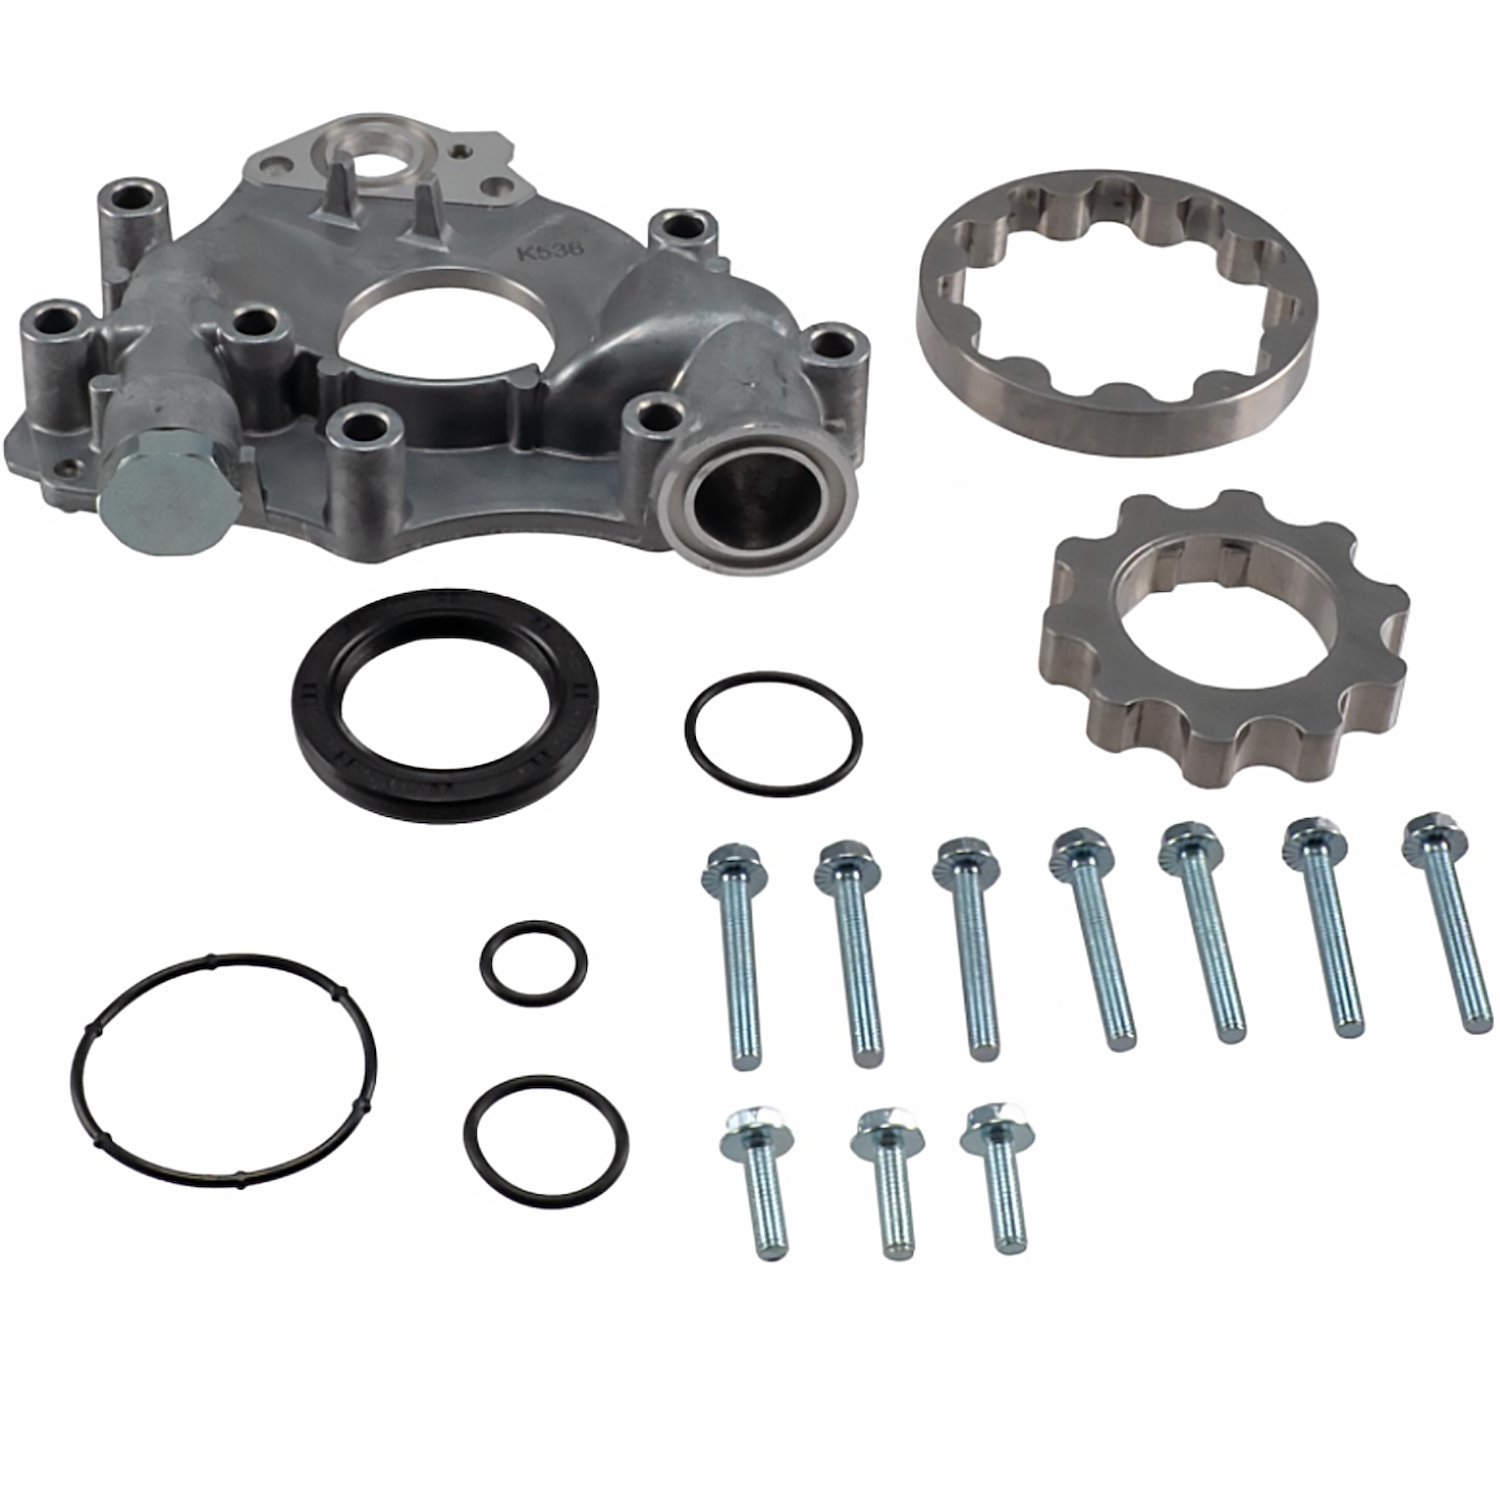 Oil Pump Repair Kit for Toyota 241 V6 Engine